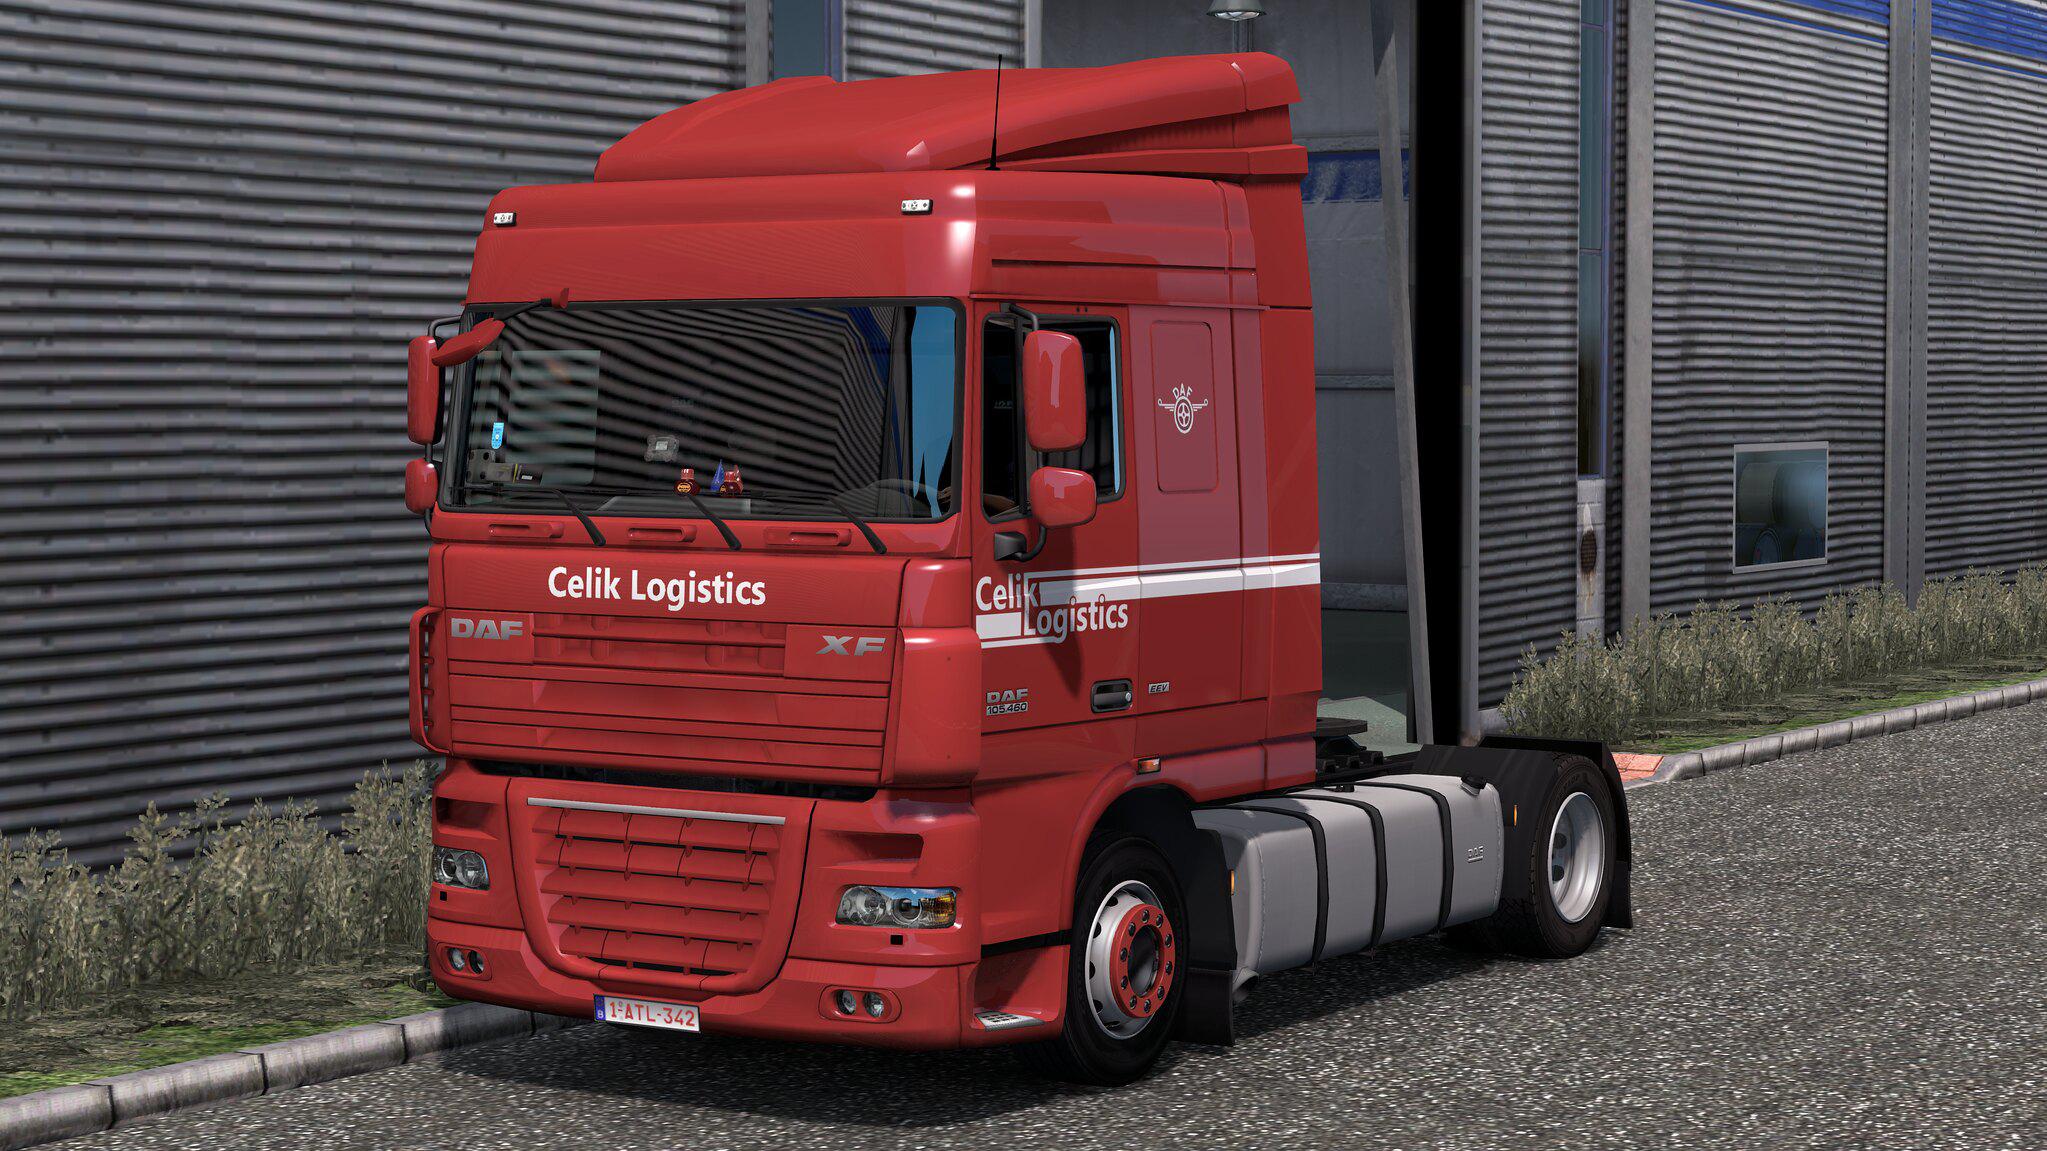 Daf Xf Xg Xg Ets Mods Ets Map Euro Truck Simulator Hot Sex Picture 8538